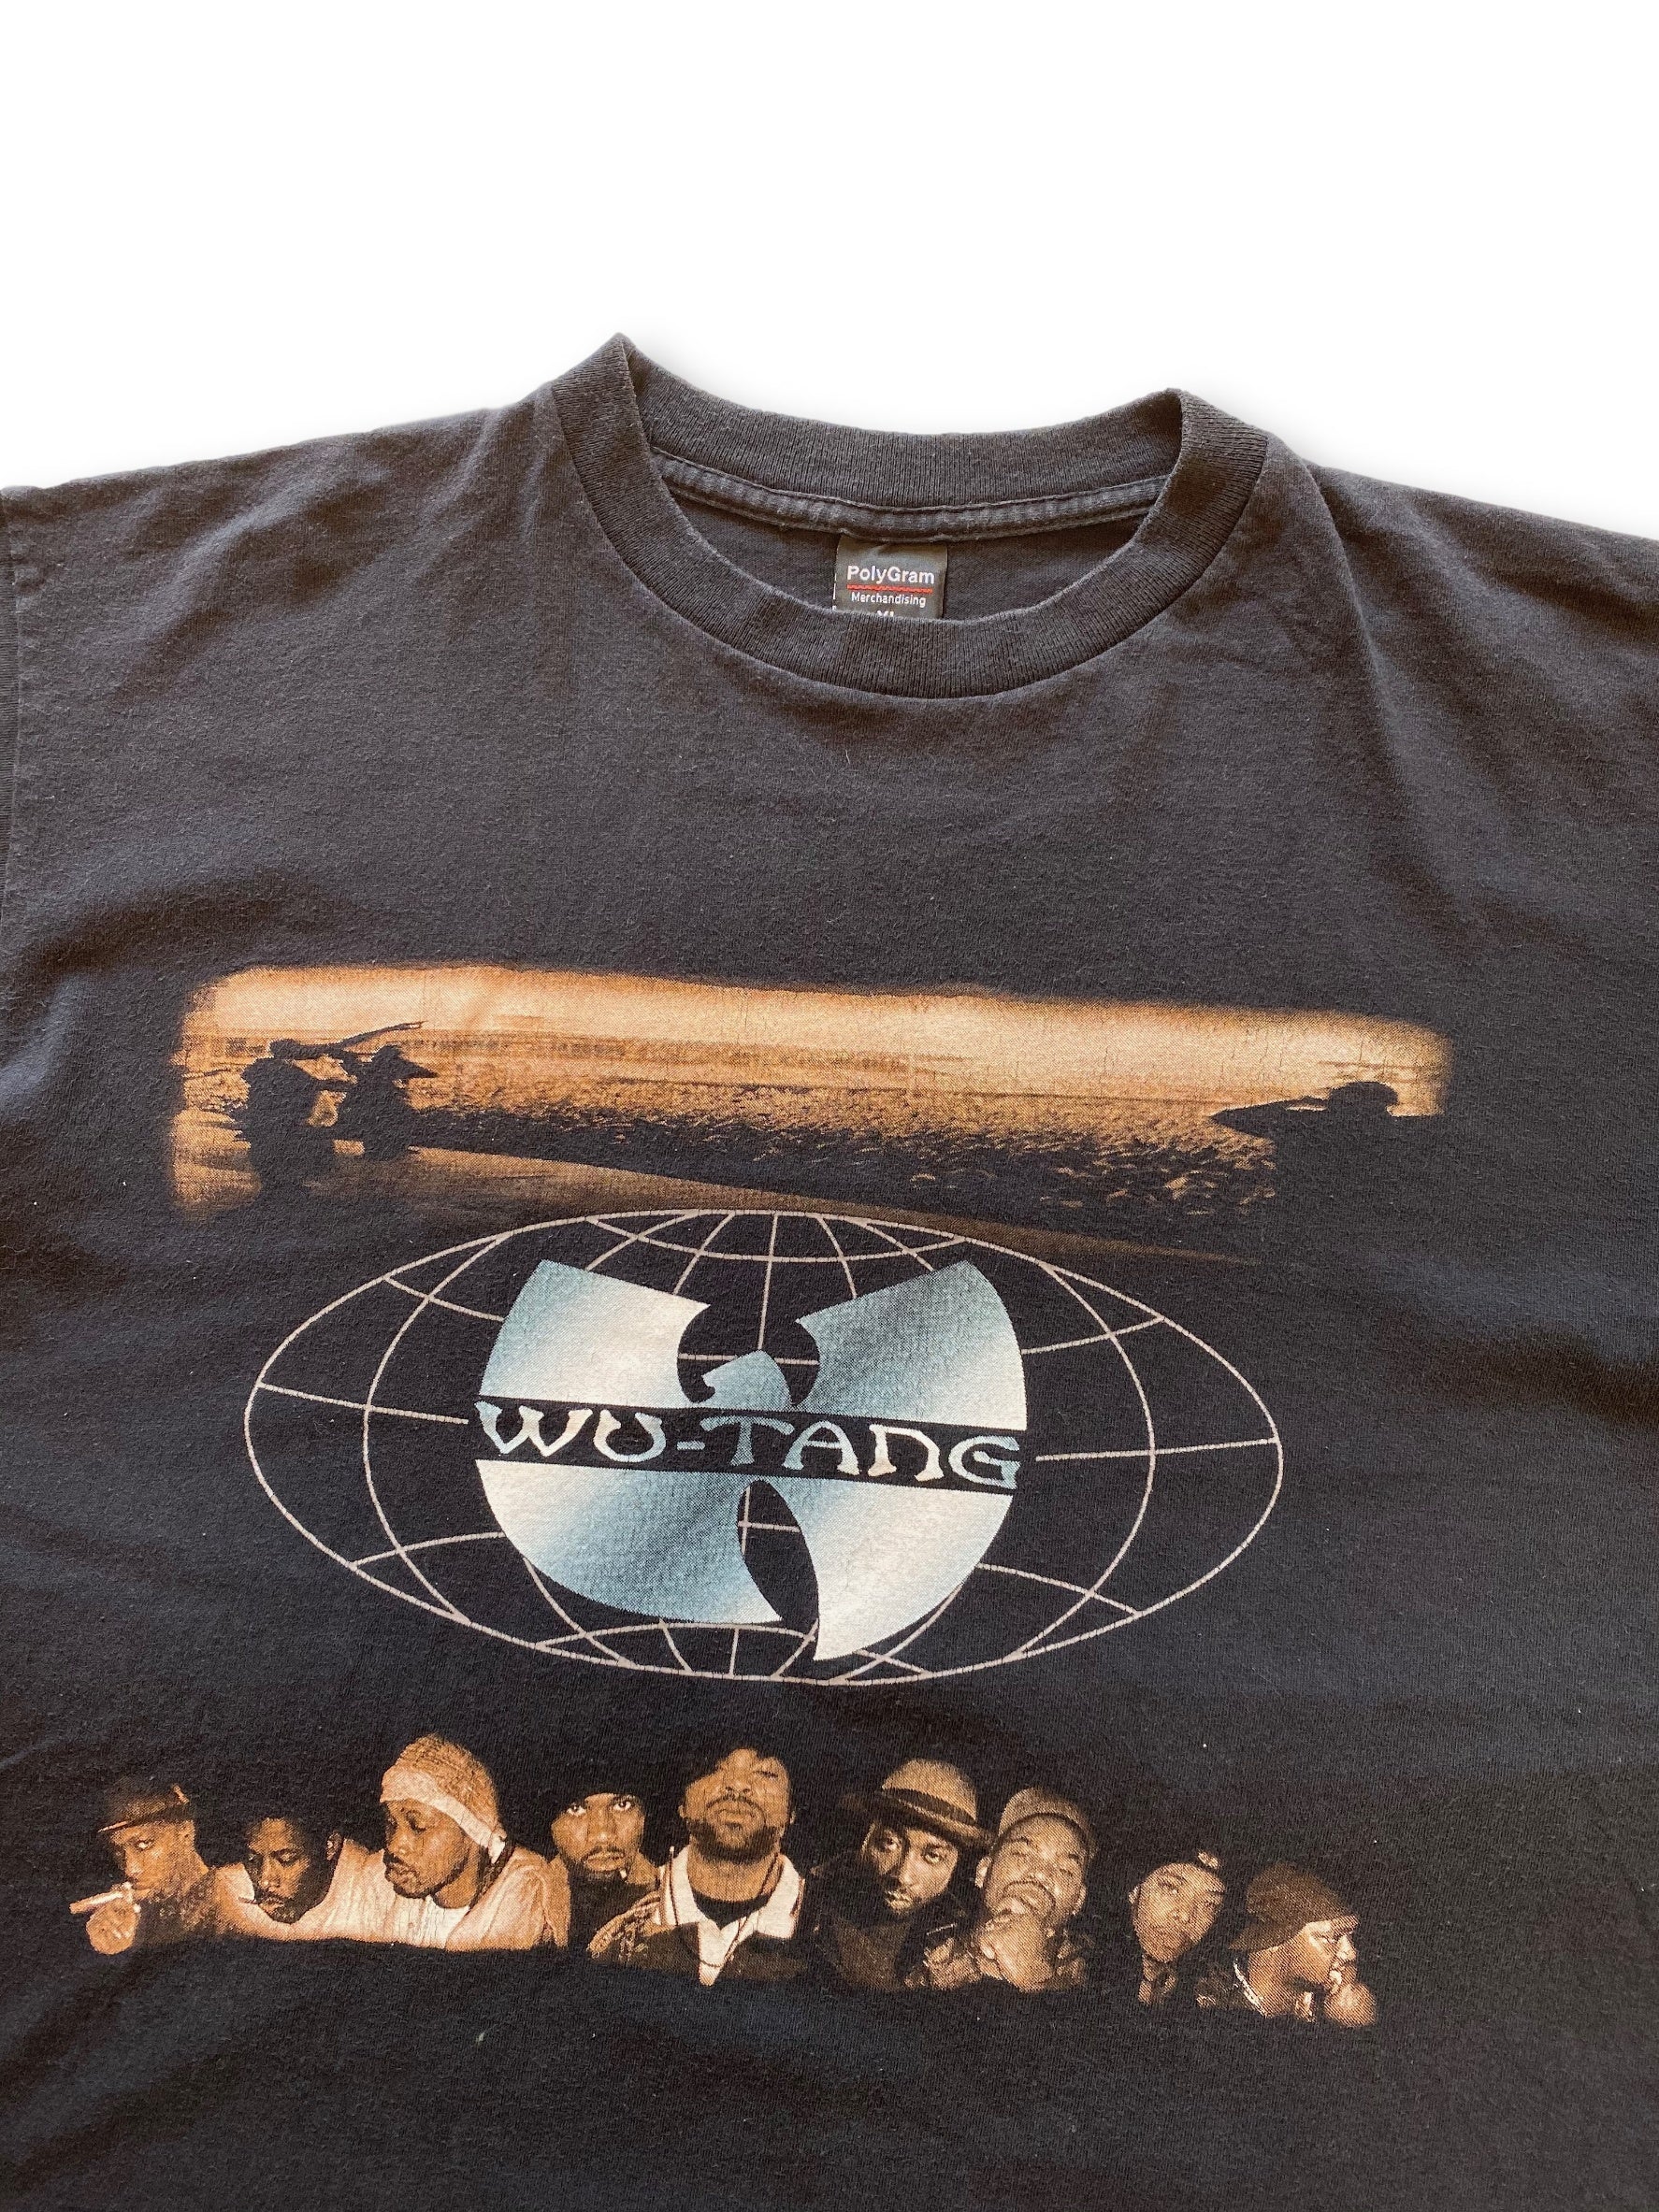 Vintage WU-TANG FOREVER Rap T-Shirt - XL